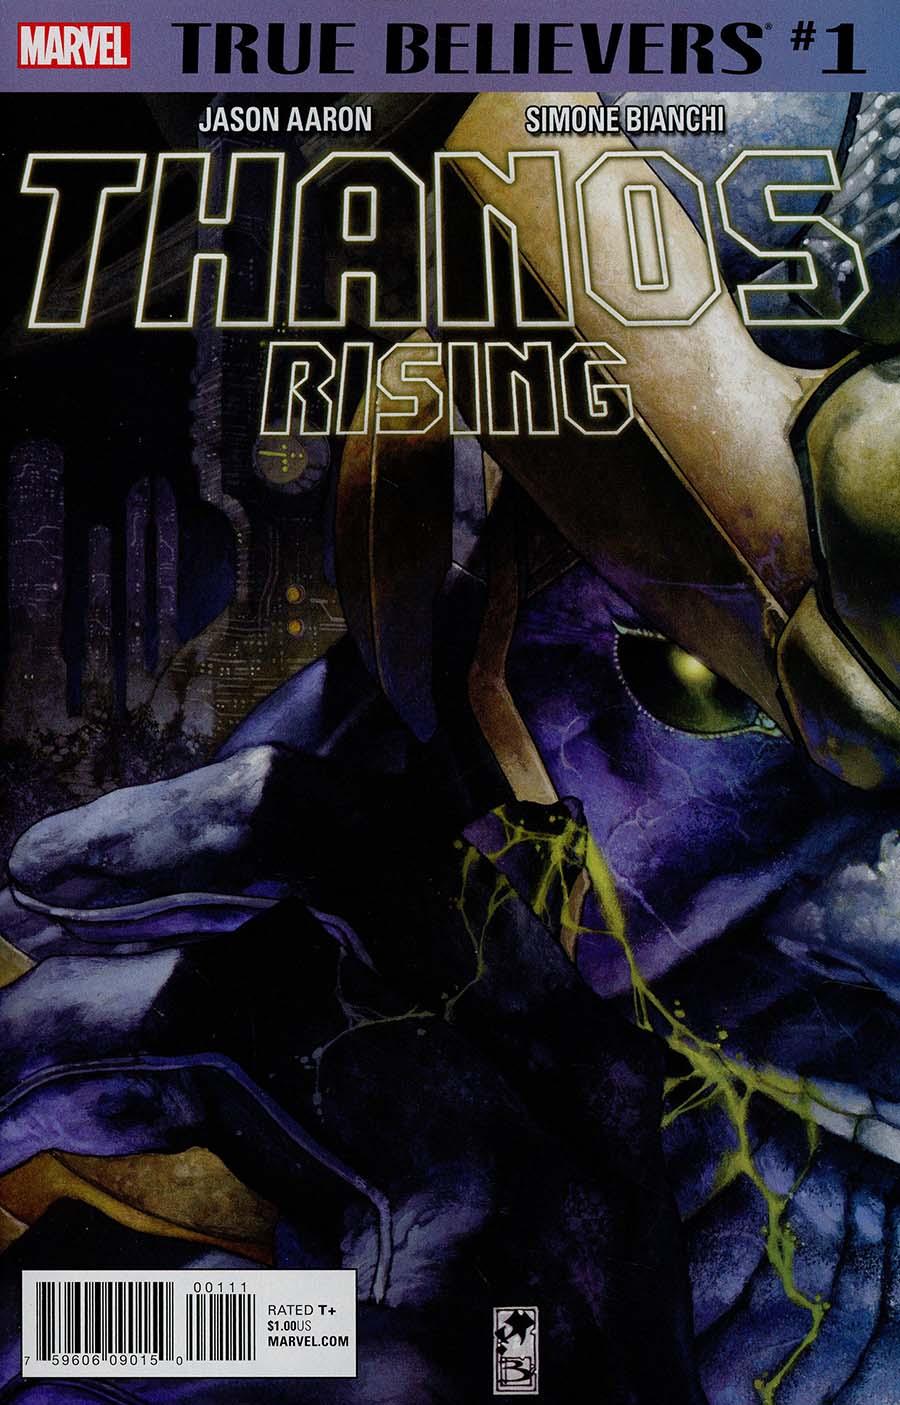 True Believers Thanos Rising Vol. 1 #1